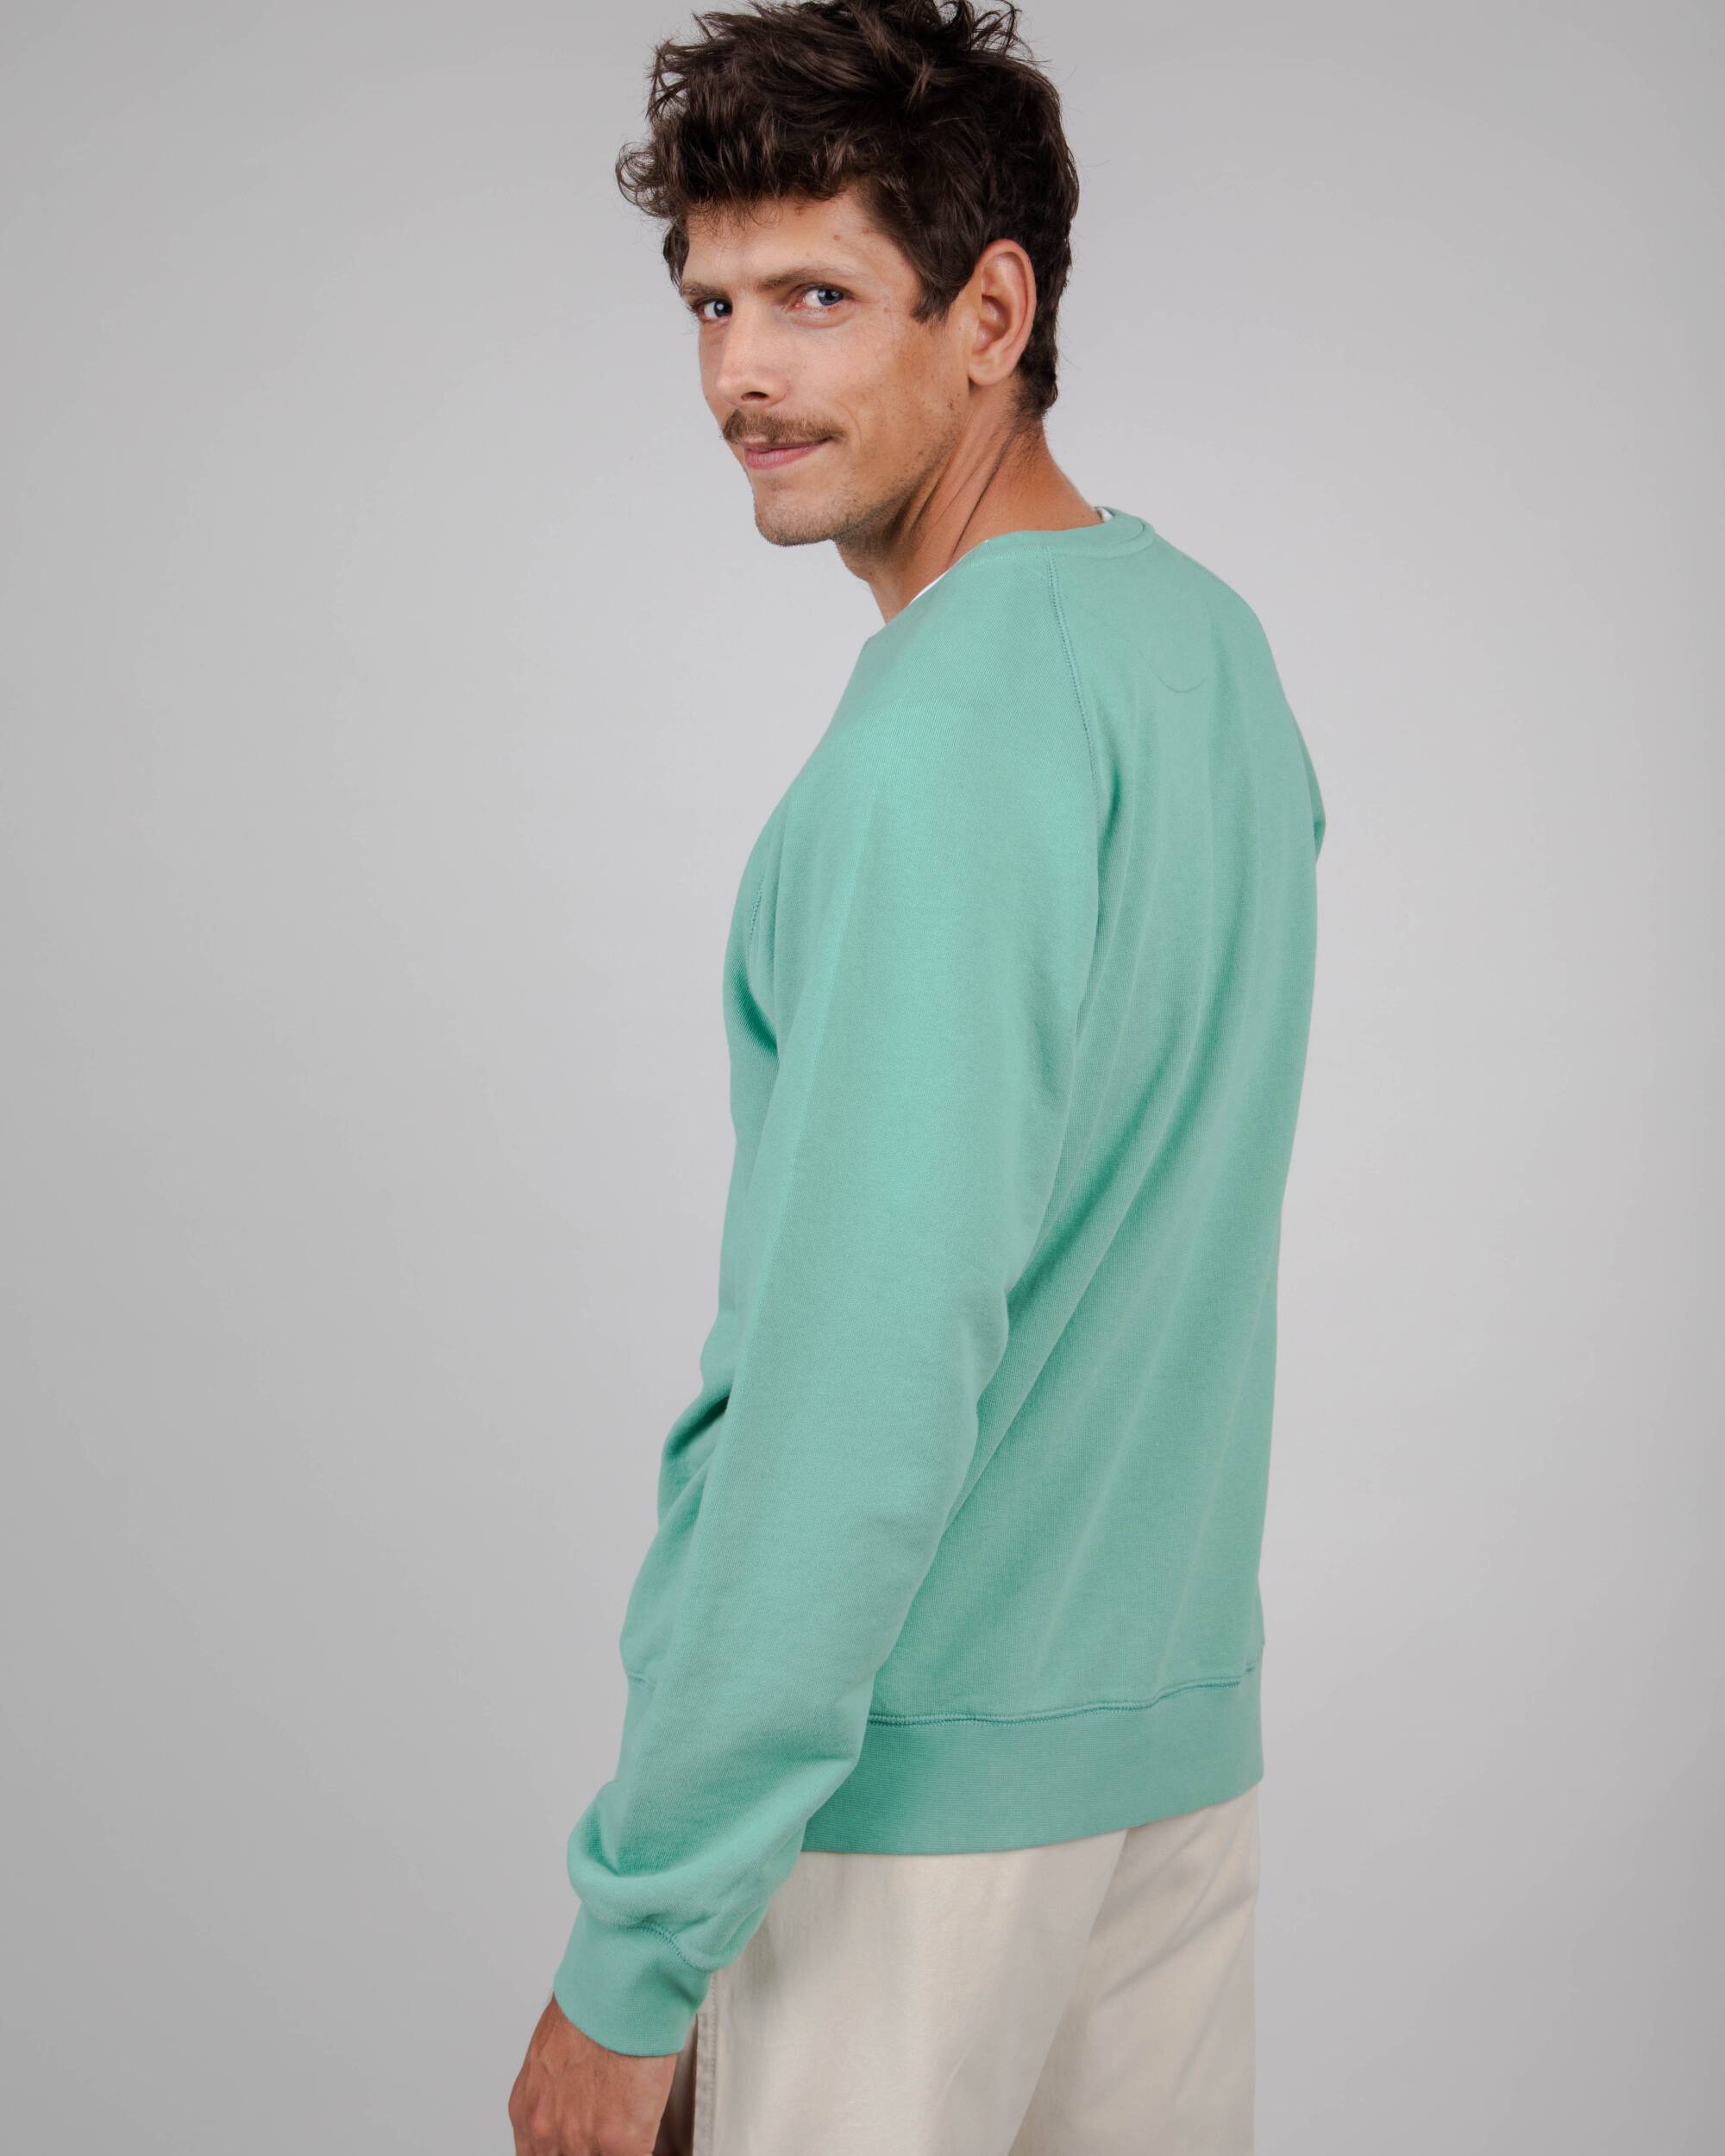 Pull ASIS Tiger vert clair en coton 100% biologique de Brava Fabrics